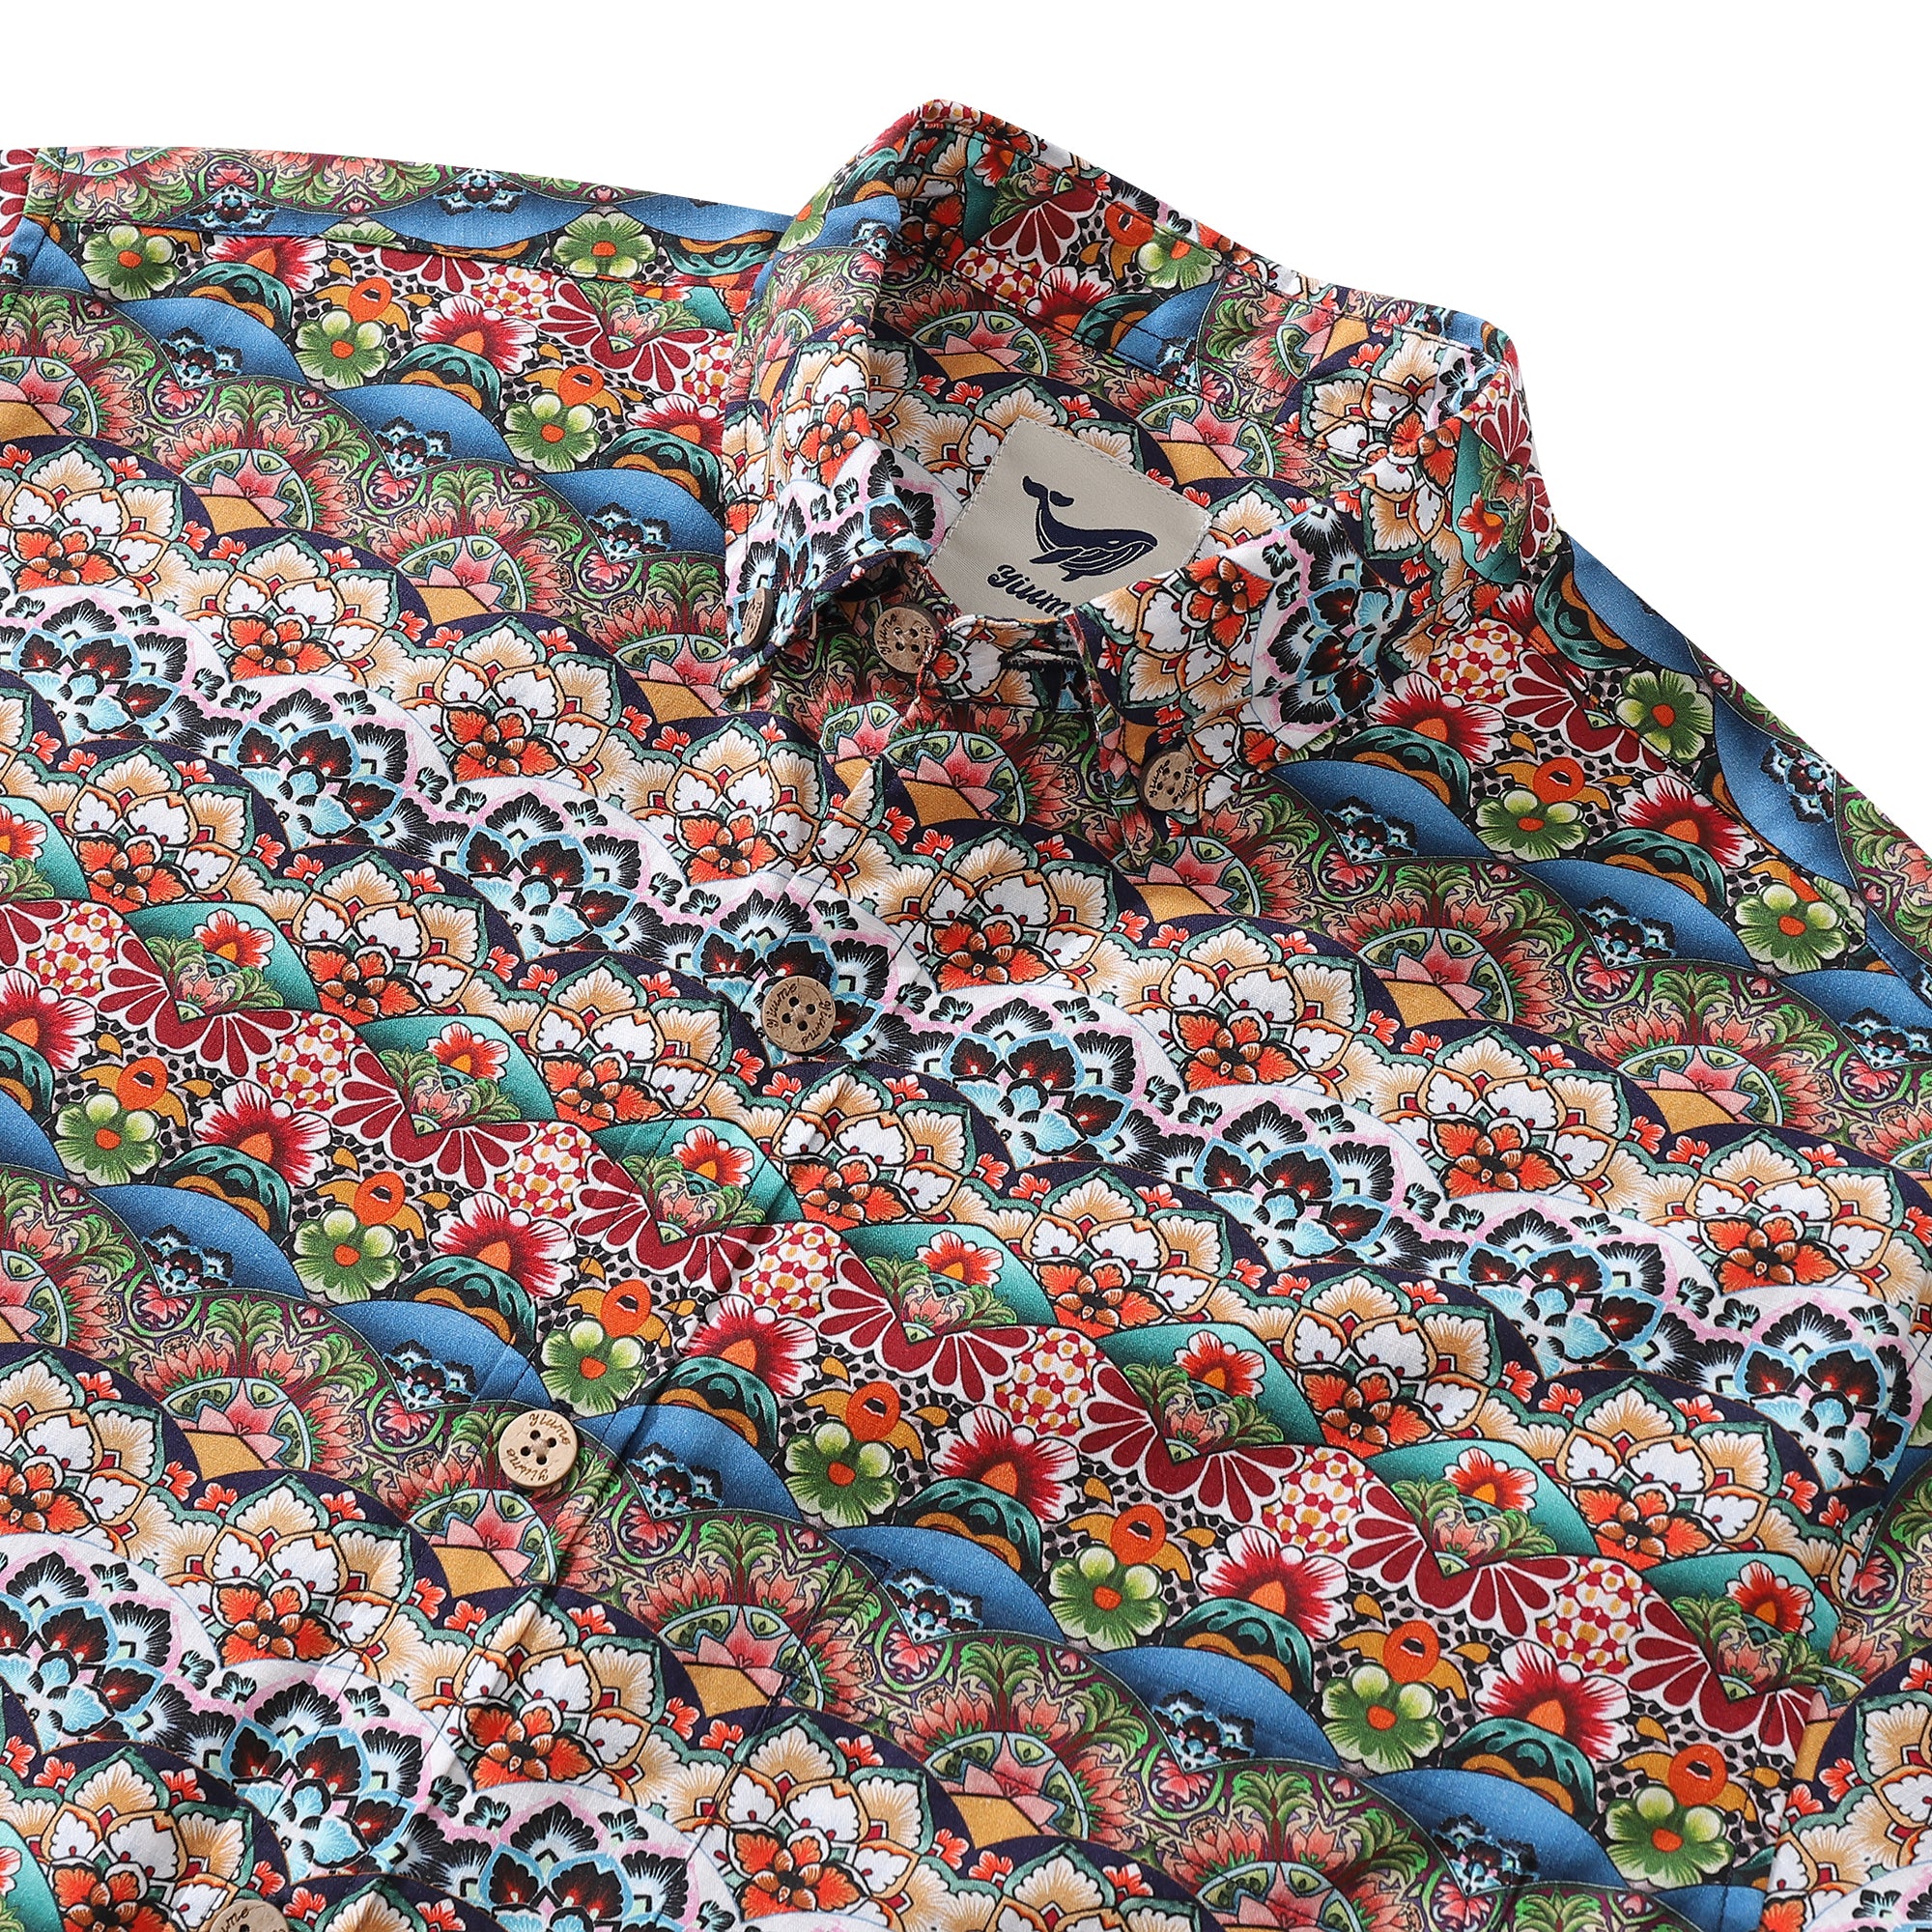 Men's Hawaiian Shirt Tropical Groove Cotton Button-down Long Sleeve Aloha Shirt